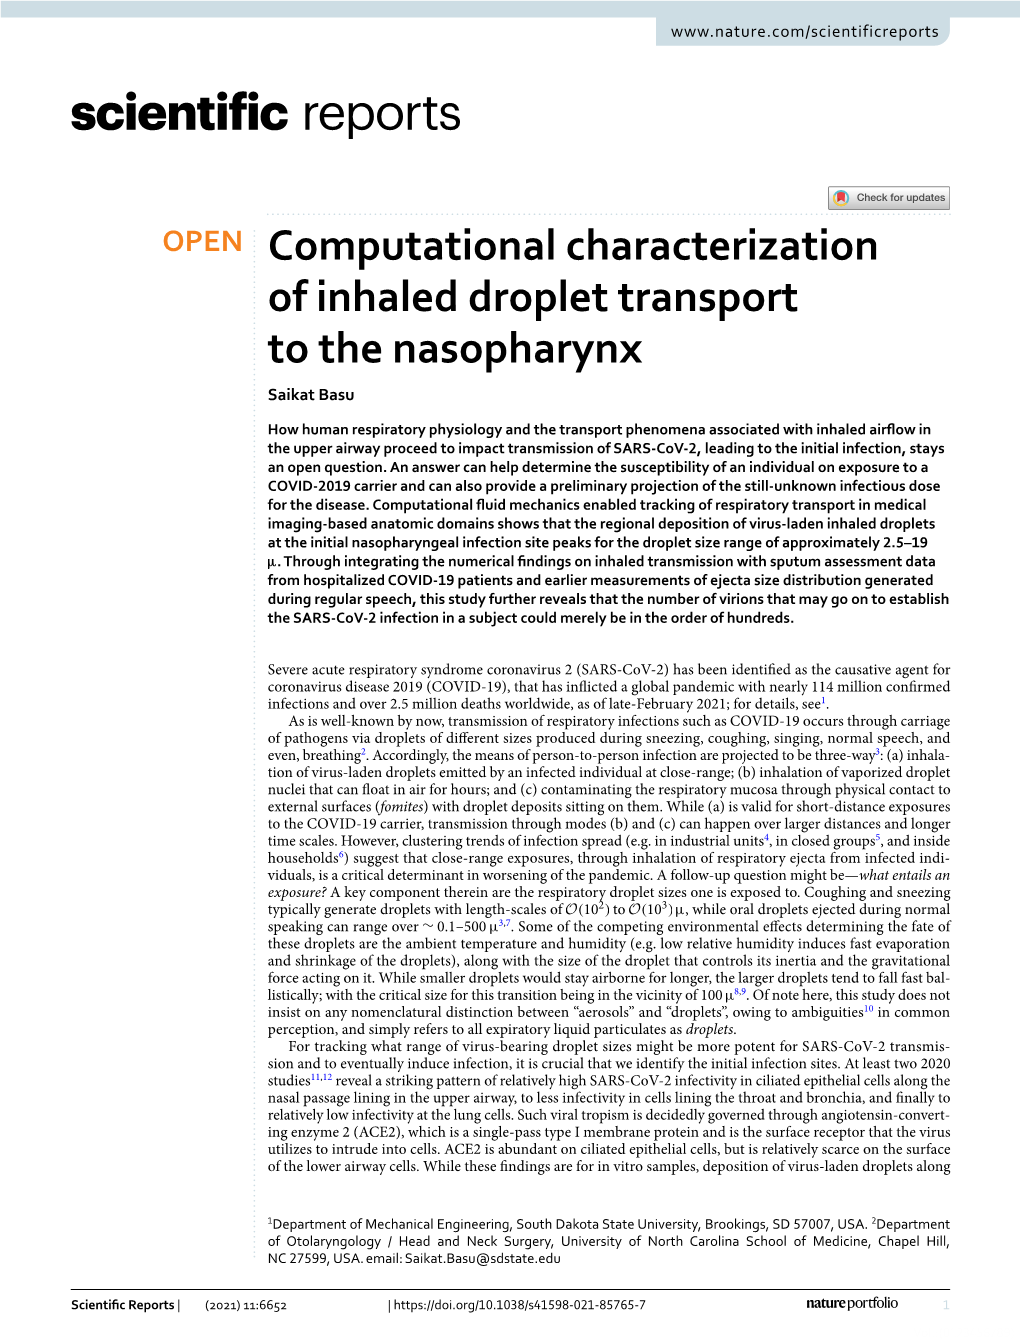 Computational Characterization of Inhaled Droplet Transport to the Nasopharynx Saikat Basu